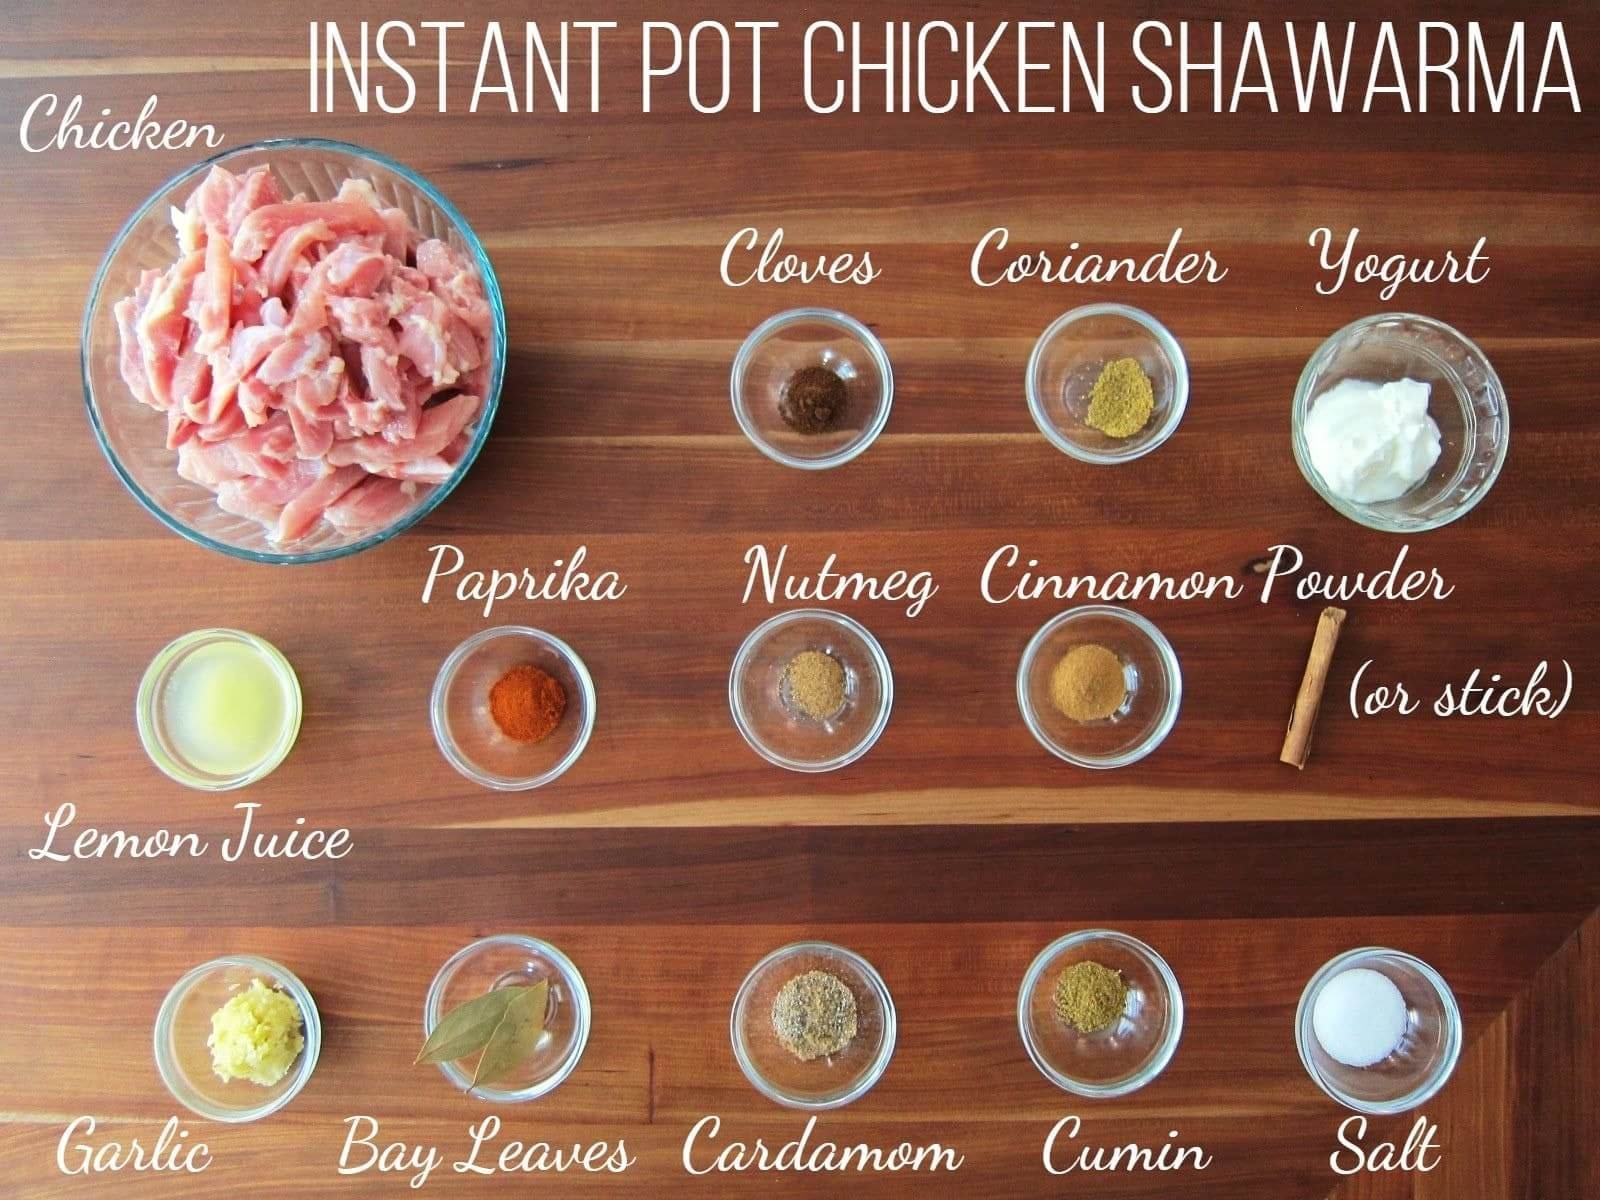 Instant Pot Chicken Shawarma Ingredients - Chicken, cloves, coriander, yogurt, lemon juice, paprika, nutmeg, cinnamon powder or stick, garlic, bay leaves, cardamom, cumin, salt